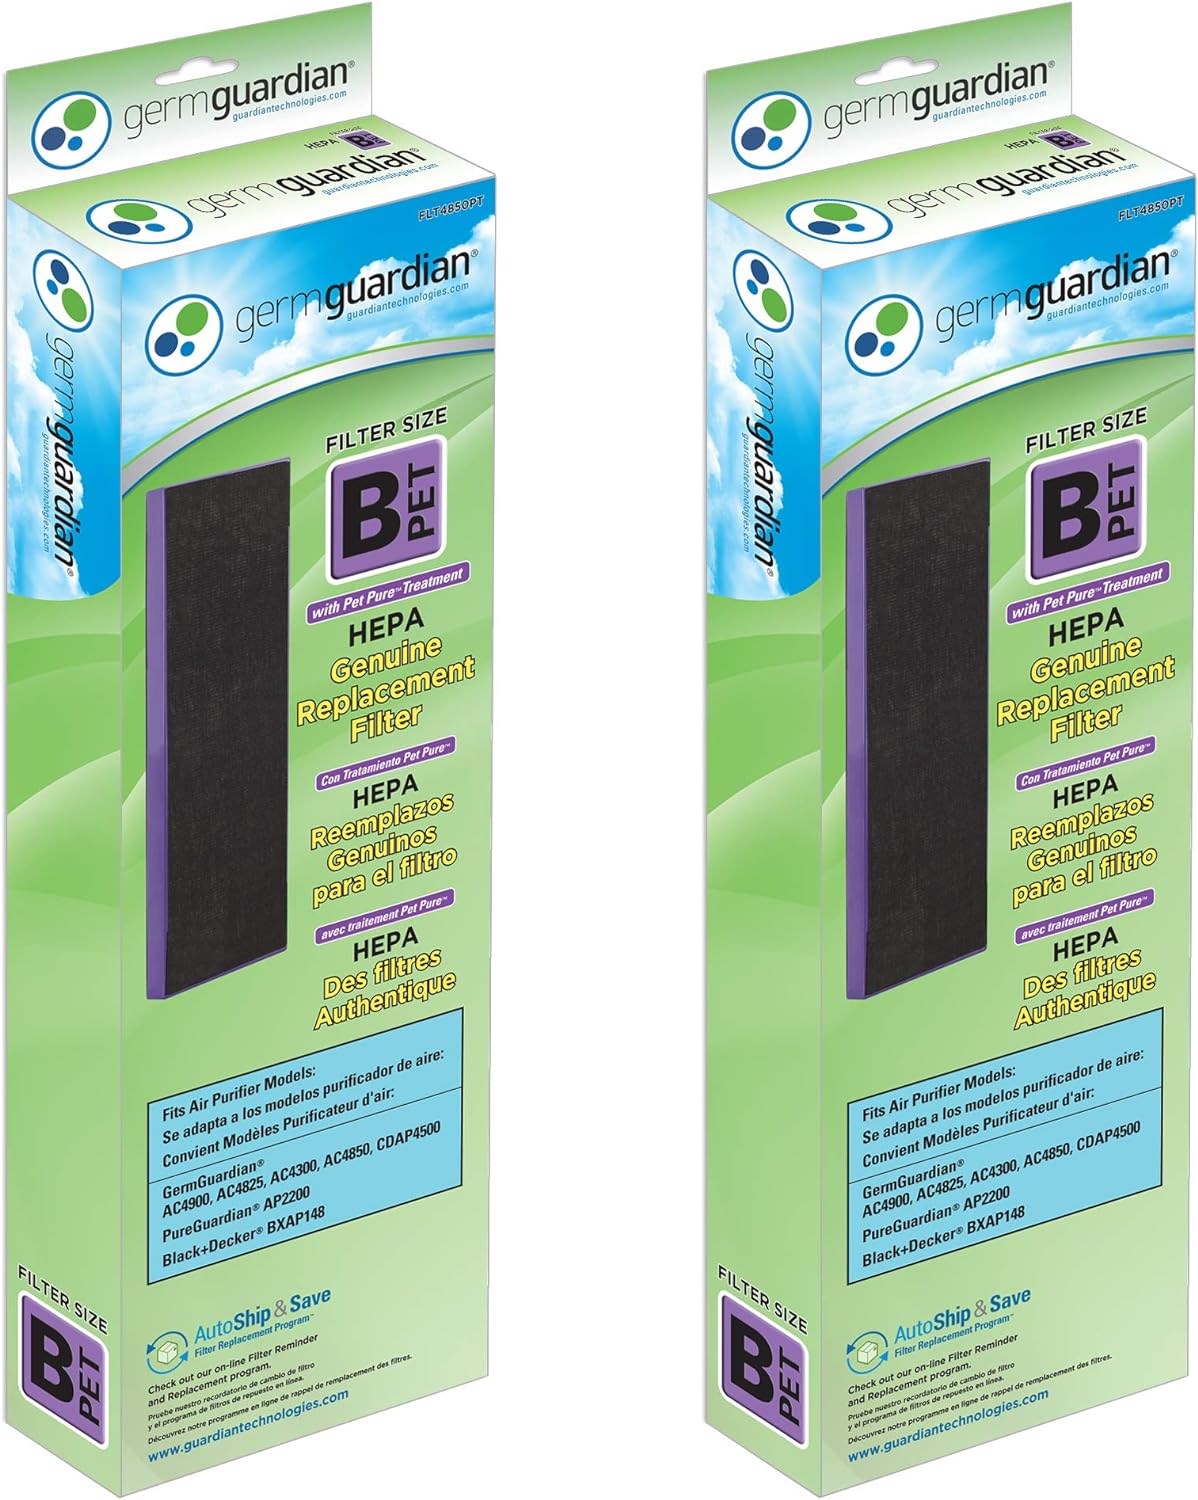 GermGuardian Filter B Pet Pure HEPA Genuine Replacement Filter, Removes 99.97% of Pollutants for AC4825, AC4820, AC4850, AC4870, CDAP4500, AC4900, AC4300, AP2200, 2- Pack, Black/Purple, FLT4850PT2PK